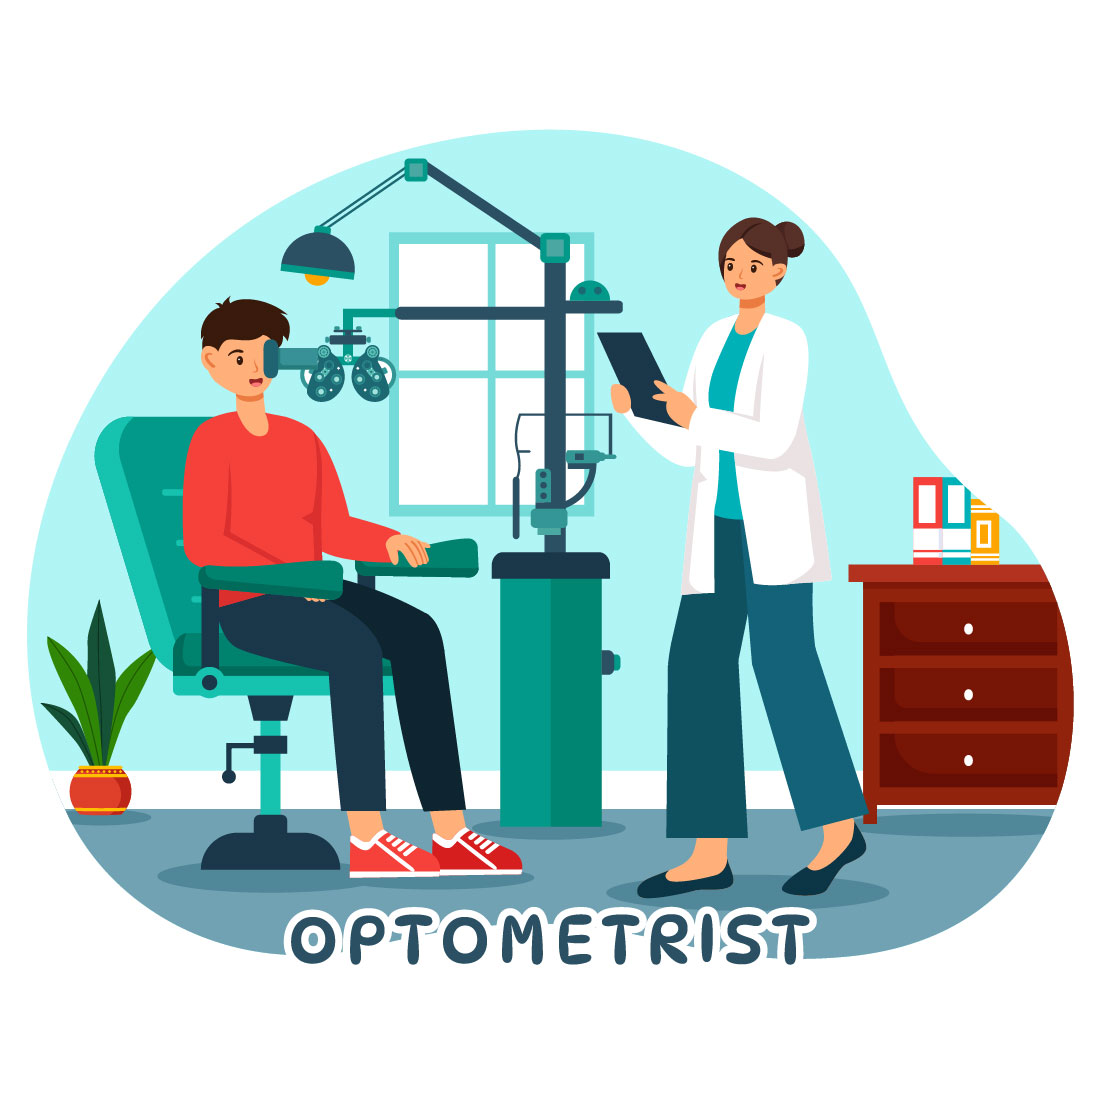 9 Optometrist Illustration preview image.